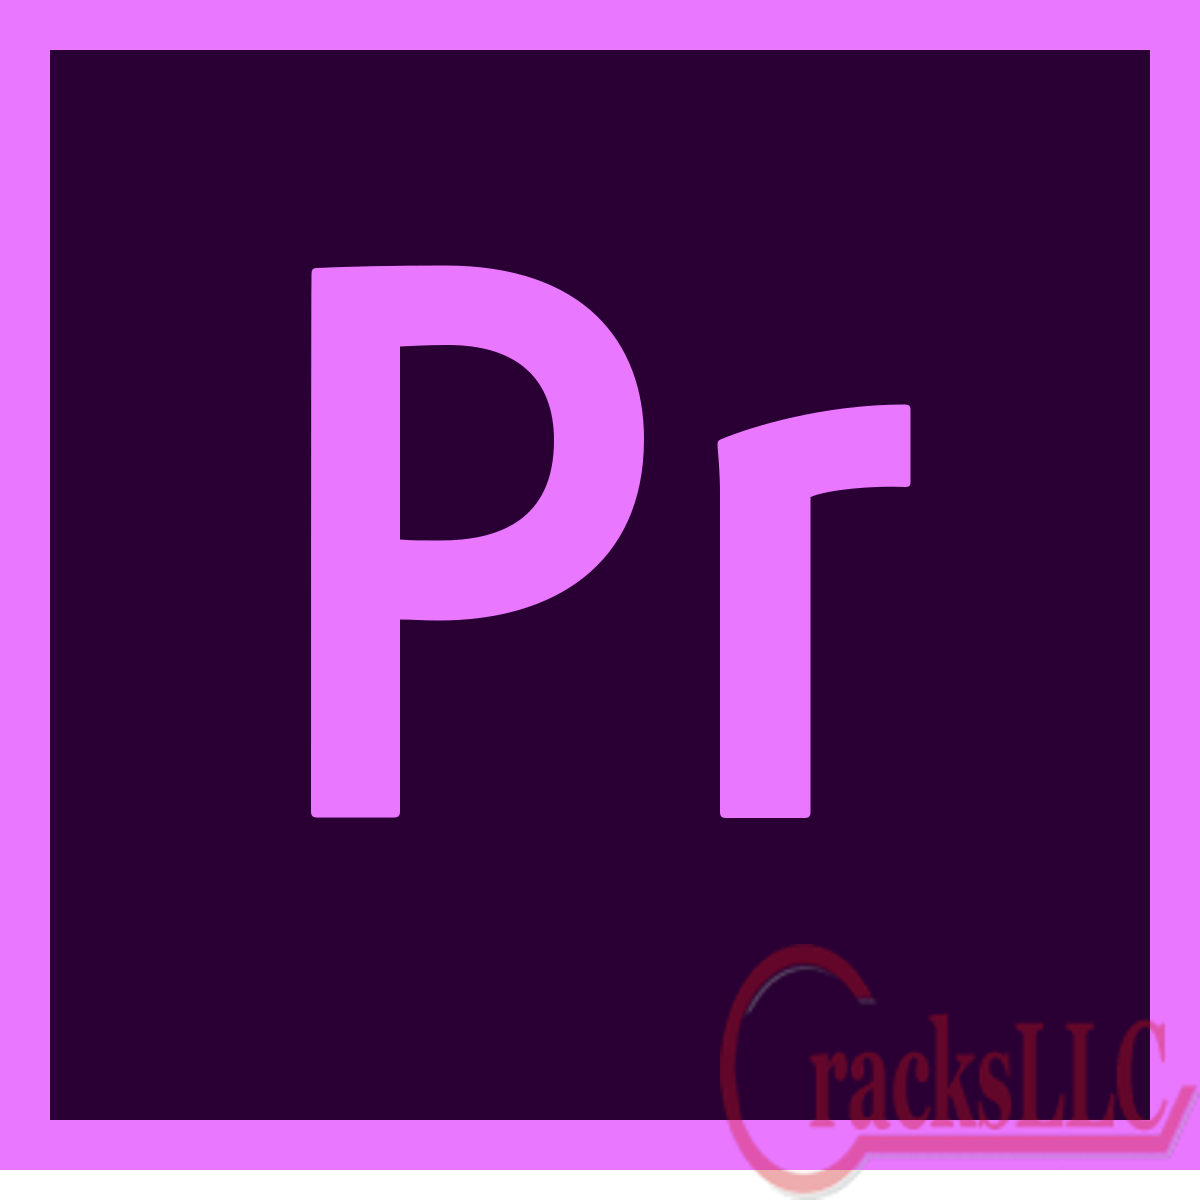 Adobe Premiere Pro Download Crack Mac